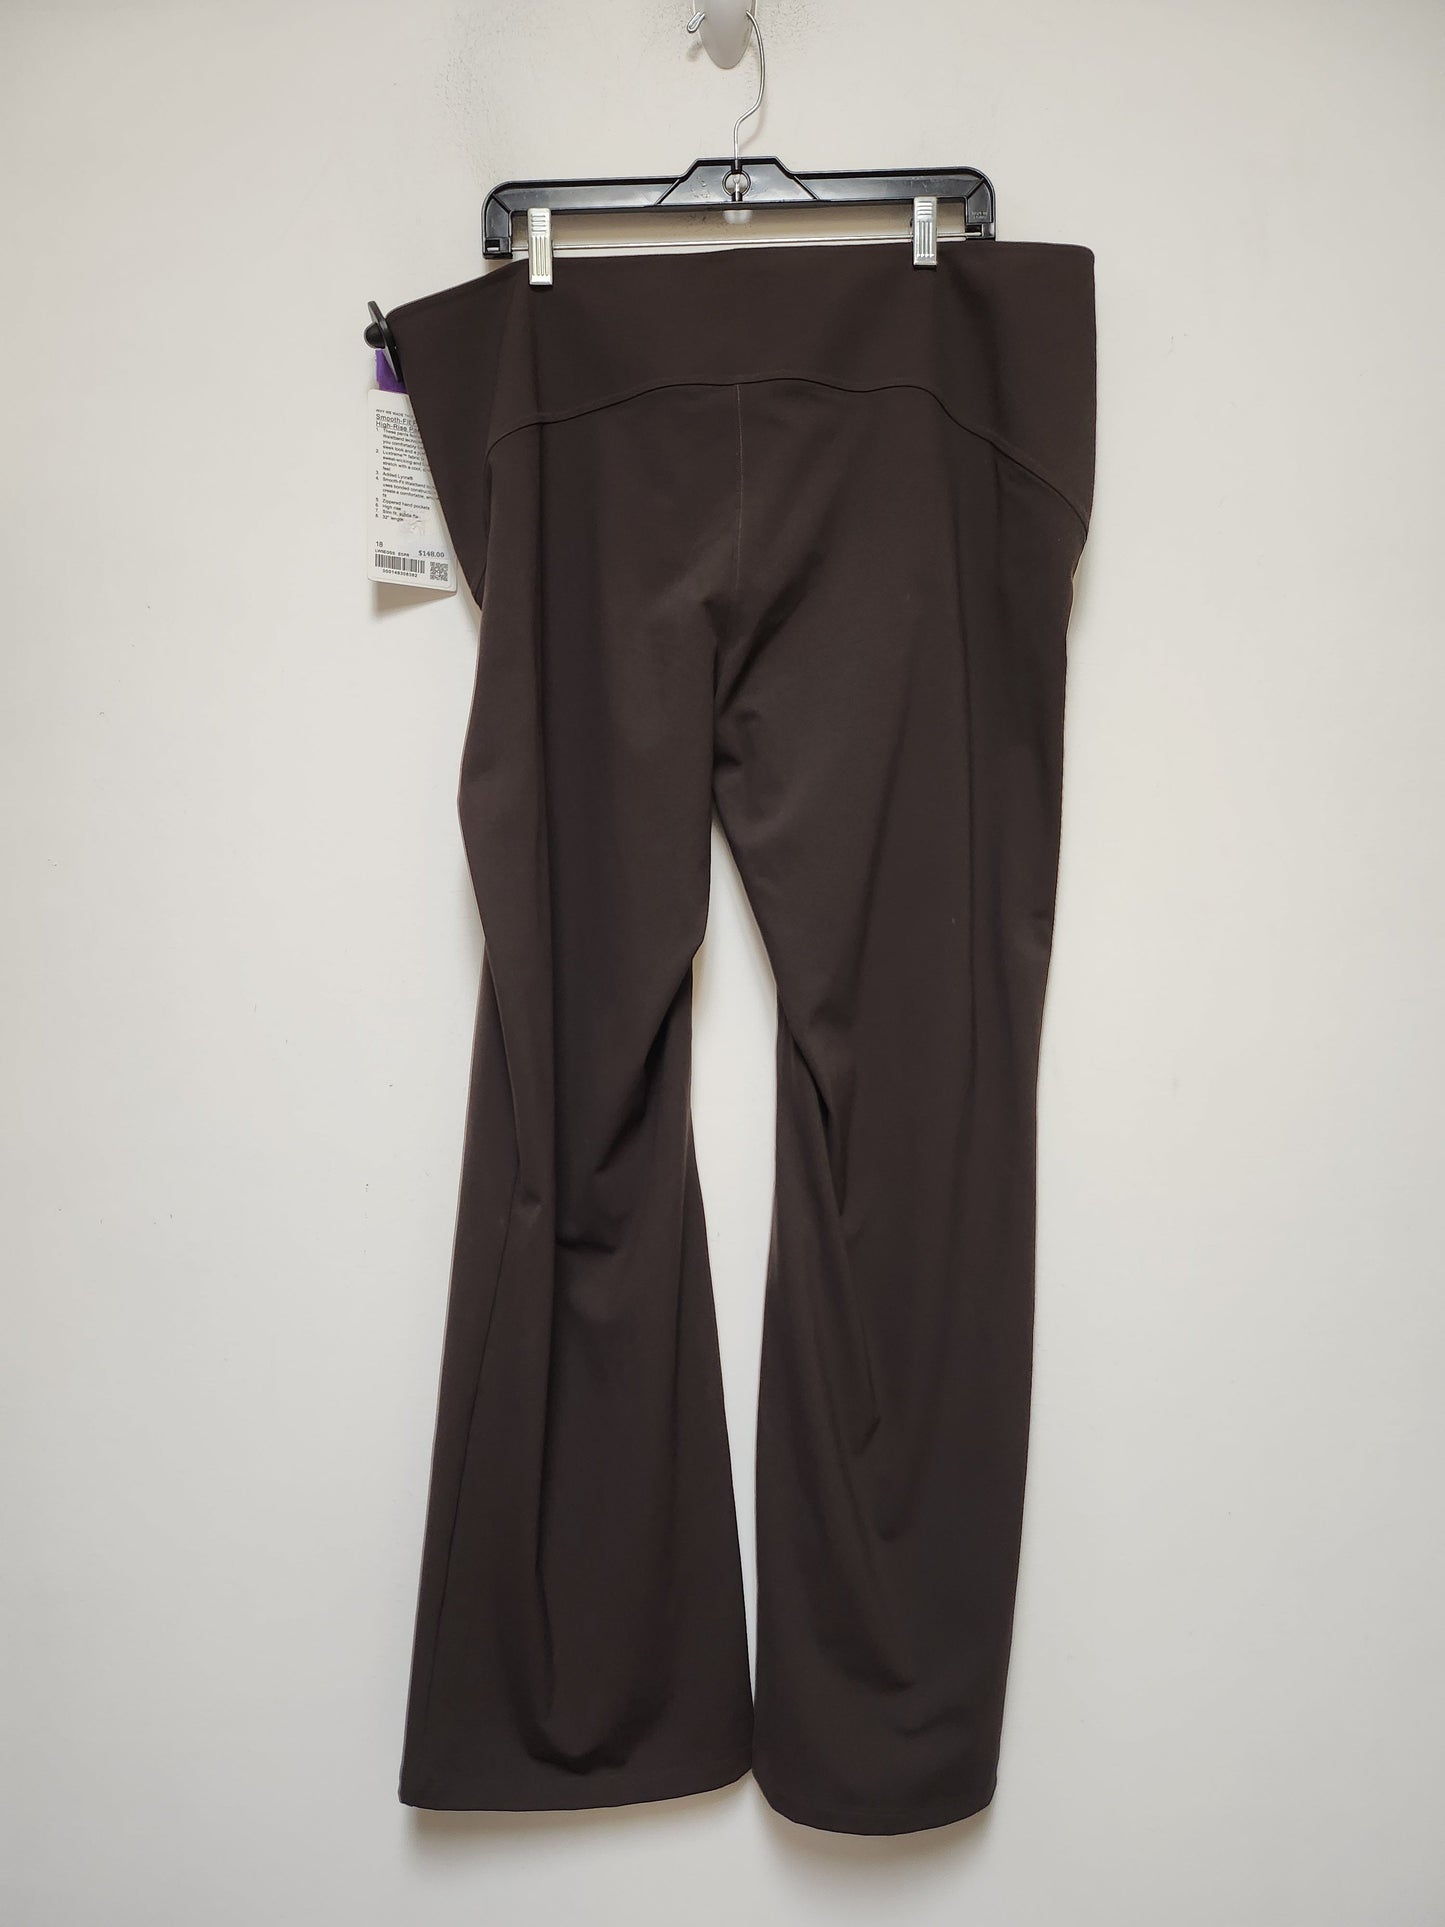 Brown Athletic Pants Lululemon, Size 18